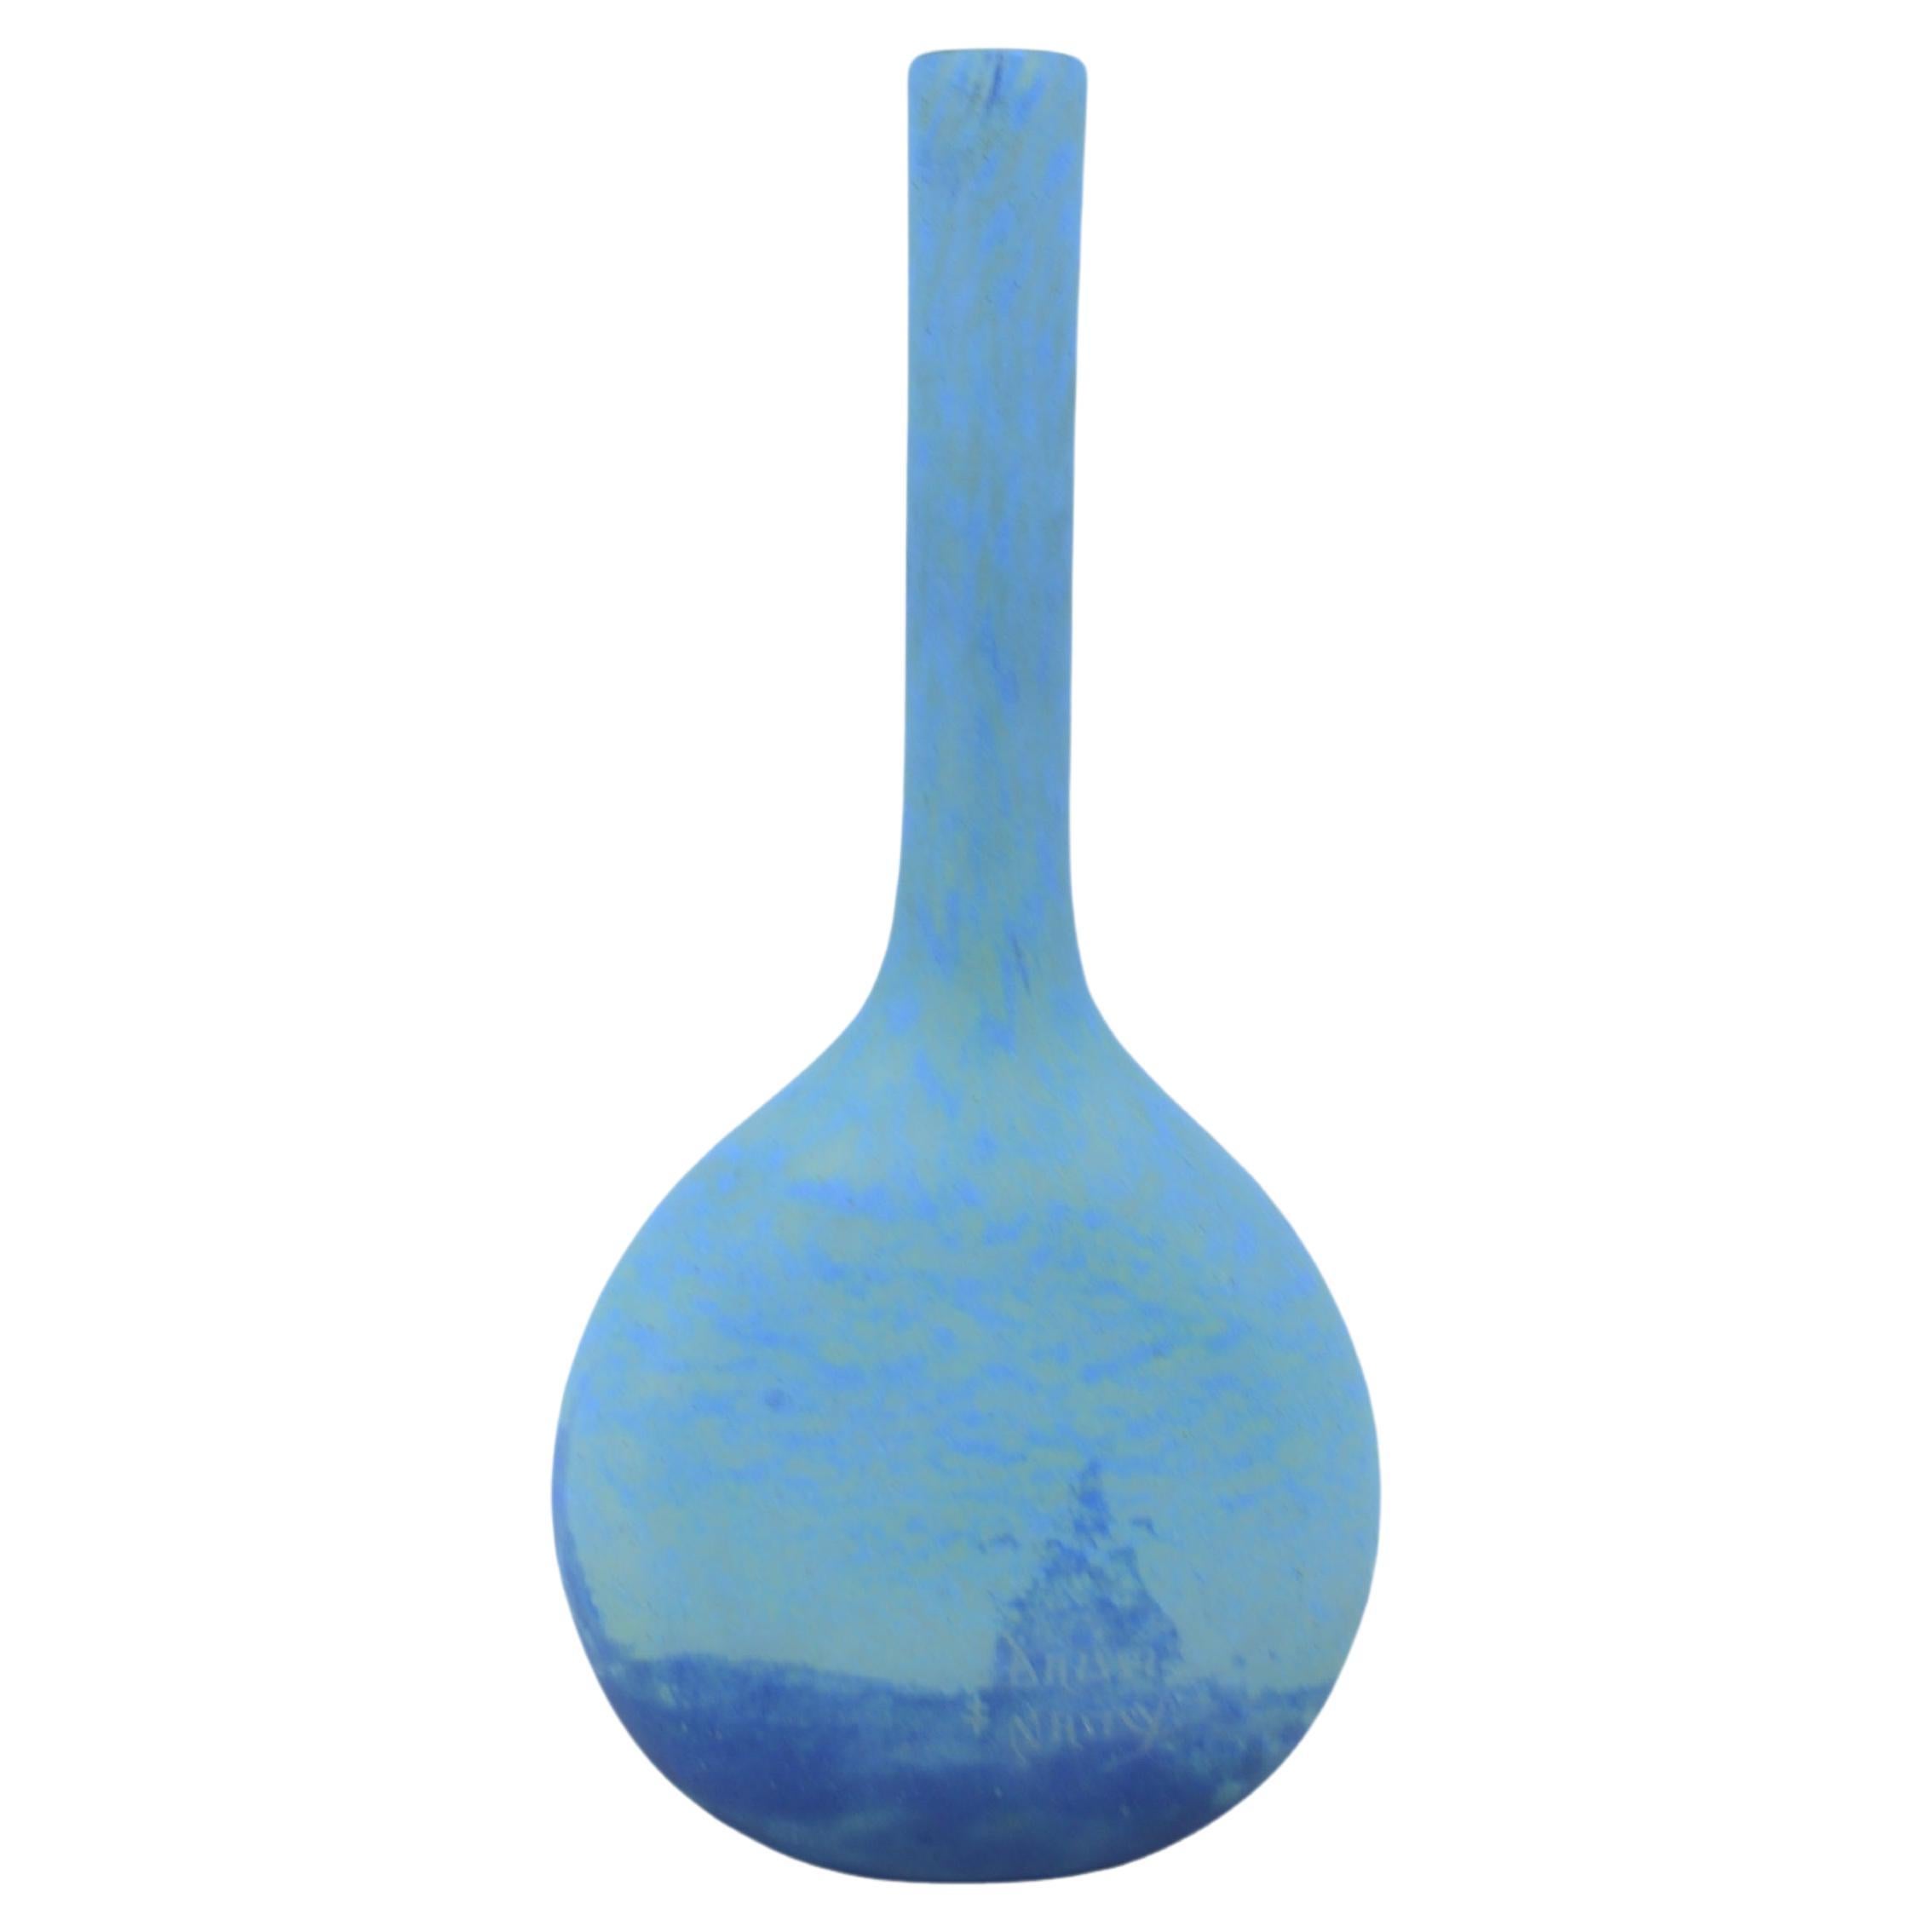 Daum Nancy, Large Blue Vase with Long Neck For Sale